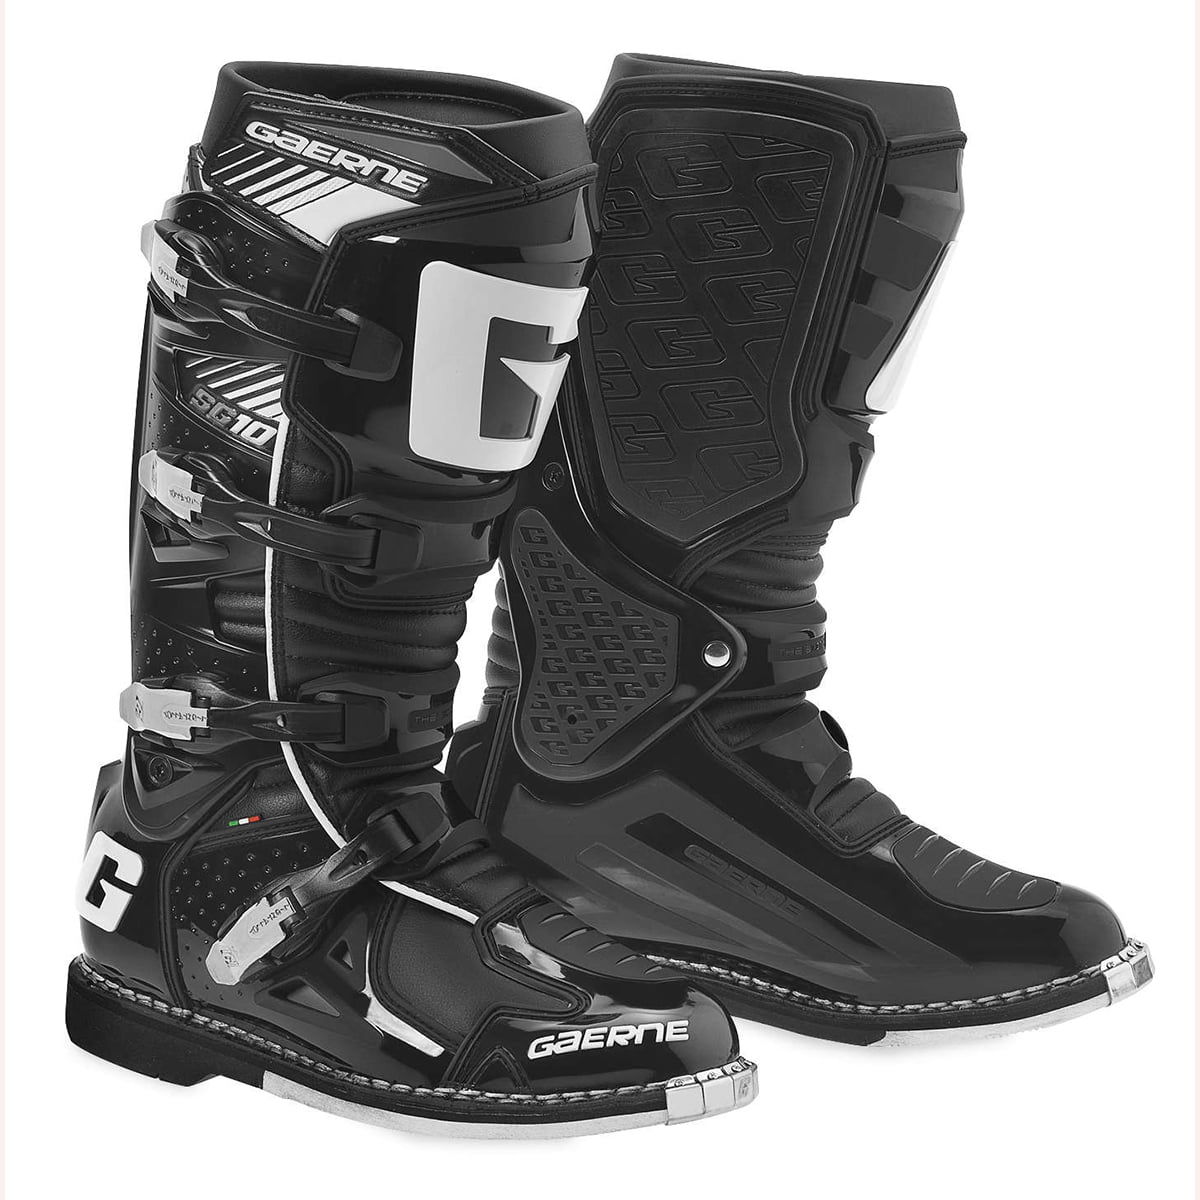 Gaerne SG-10 MX Offroad Boots Black 10 USA - Walmart.com